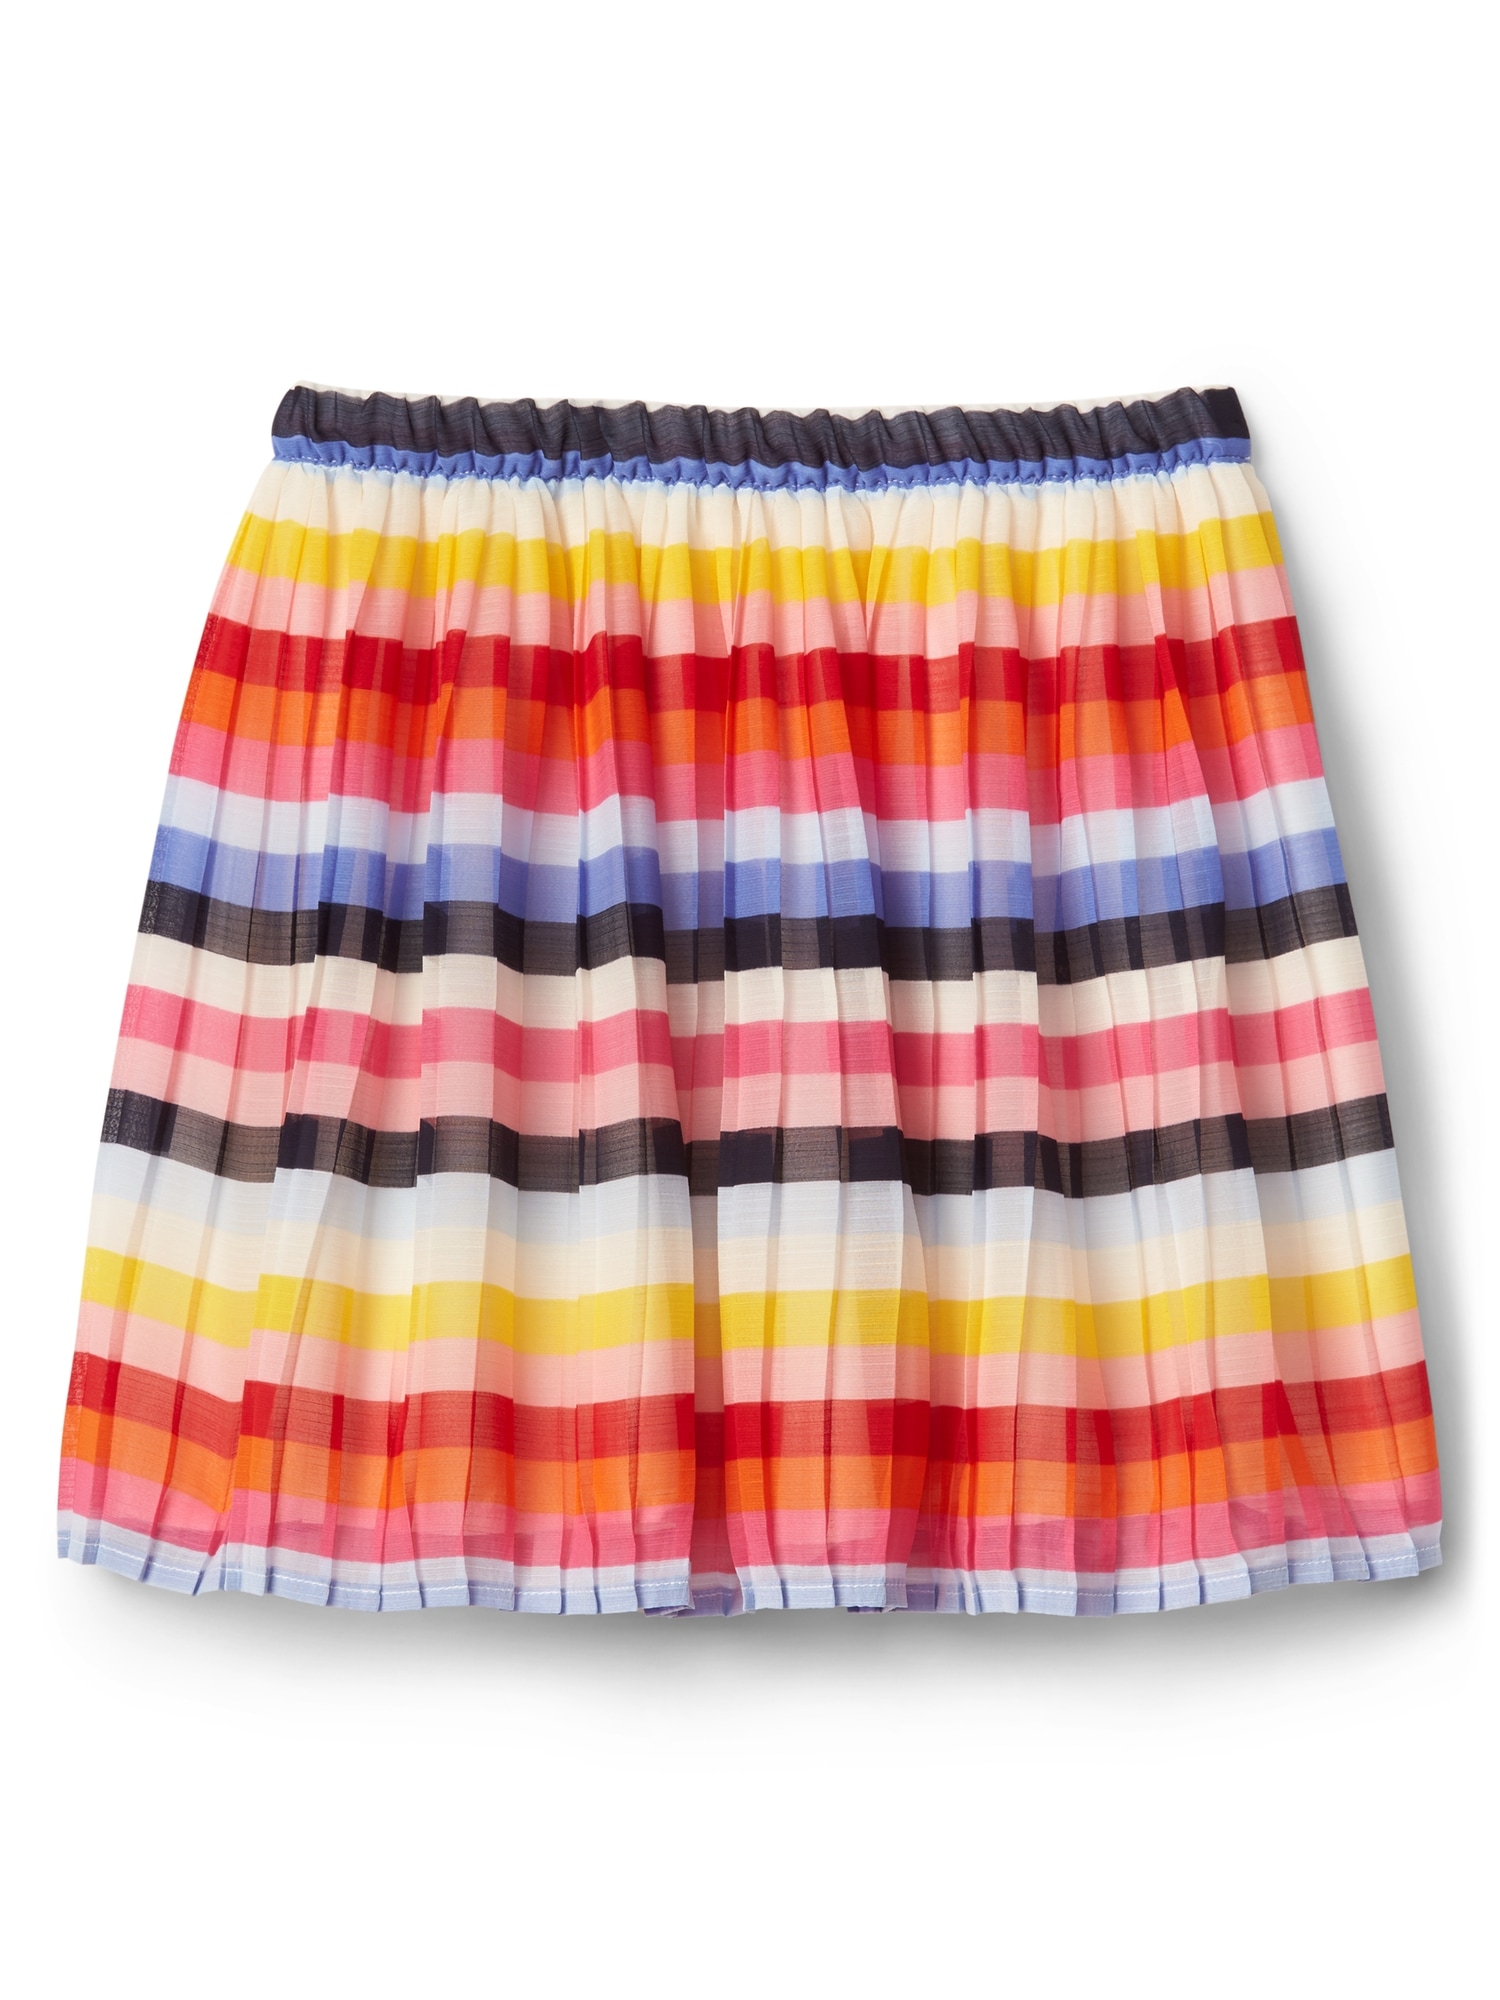 Crazy stripe shirred skirt | Gap